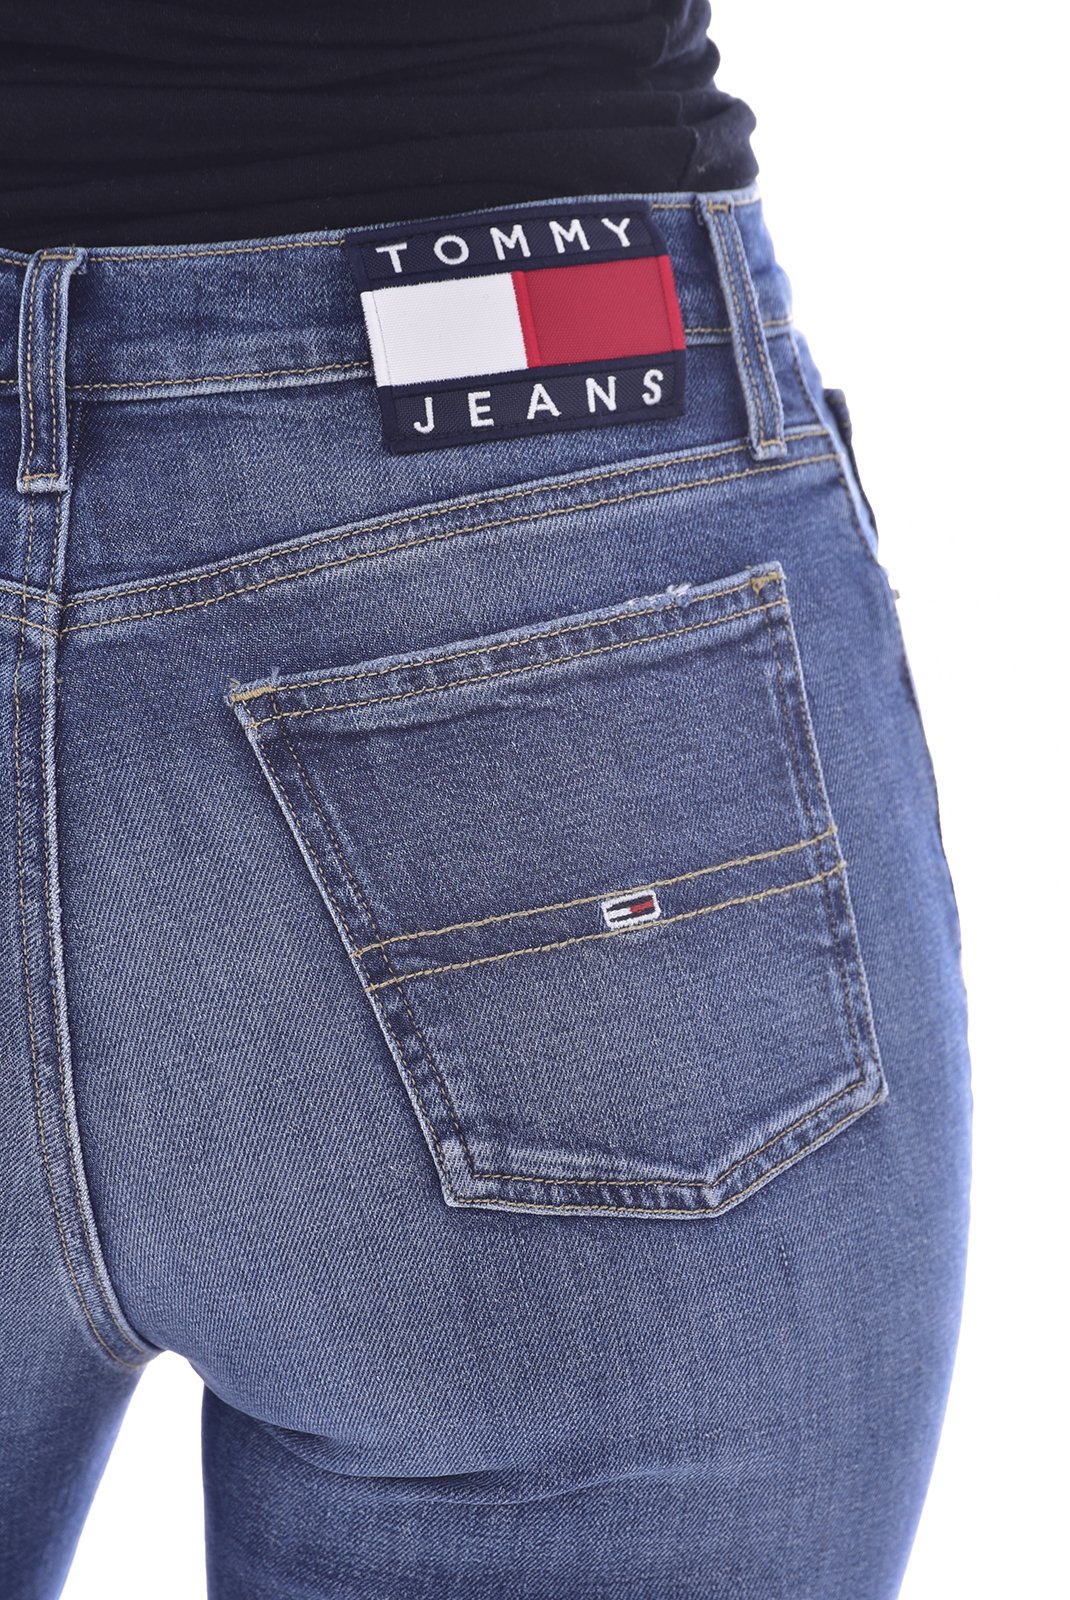 Jeans   Tommy Jeans DW0DW09885 Izzy 1A5 bleu